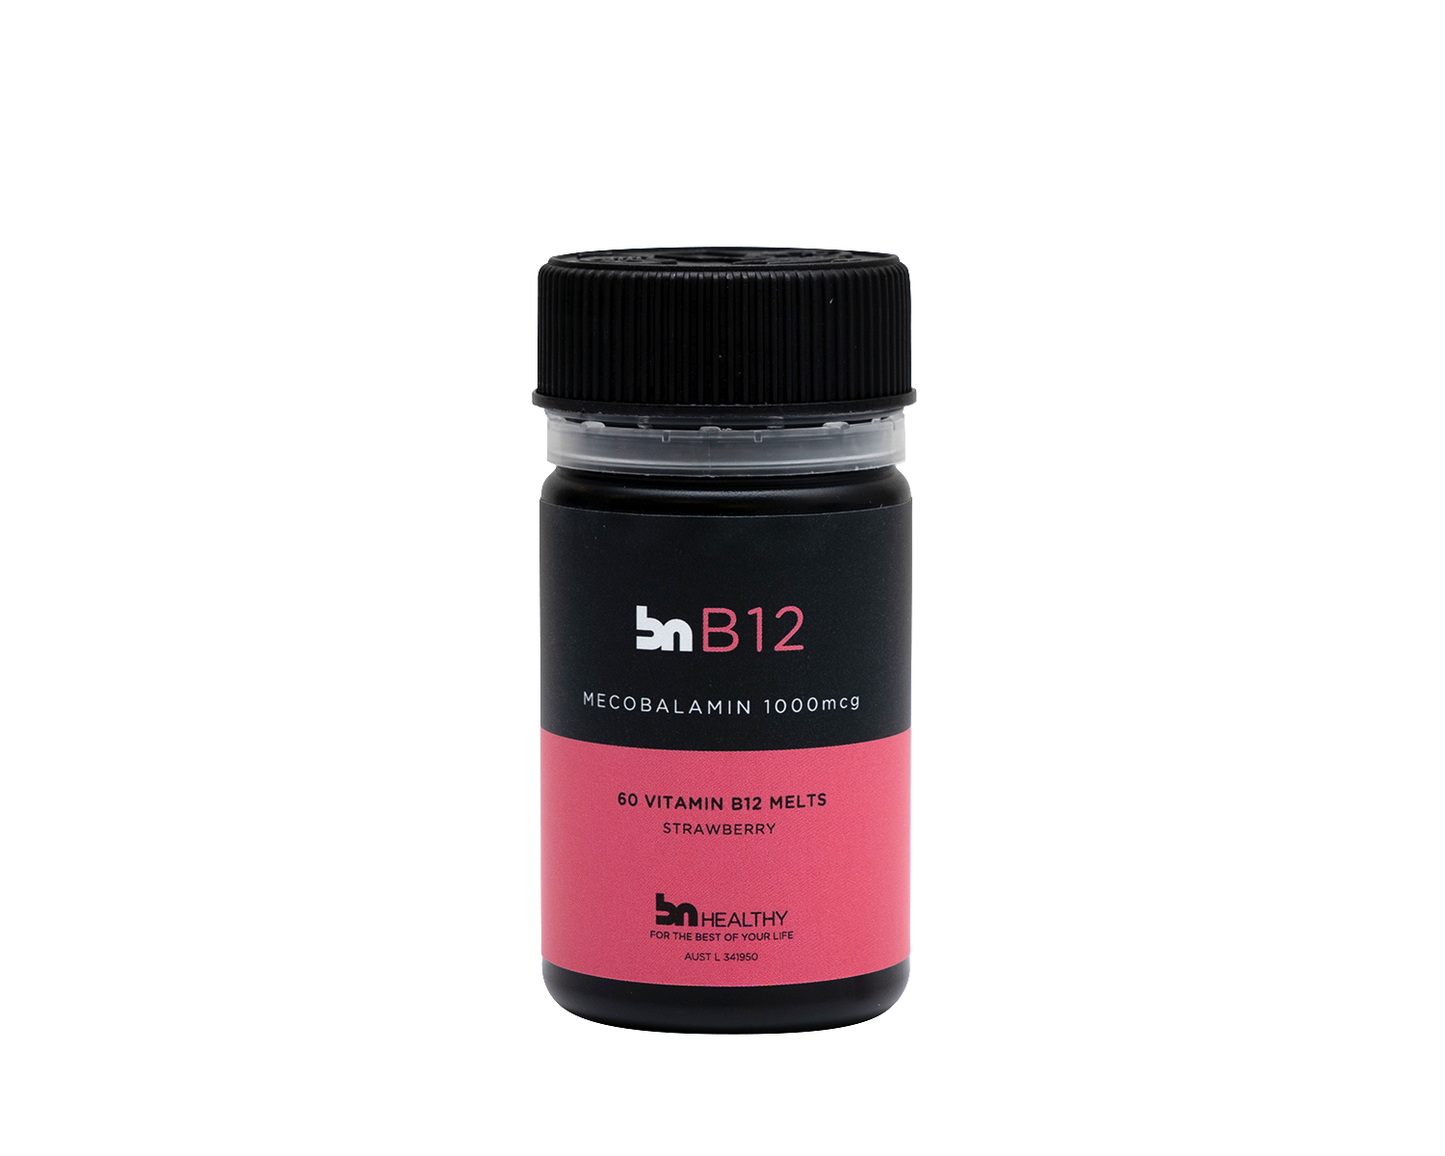 BN B12 - Vitamin B12 Melts bottle front view